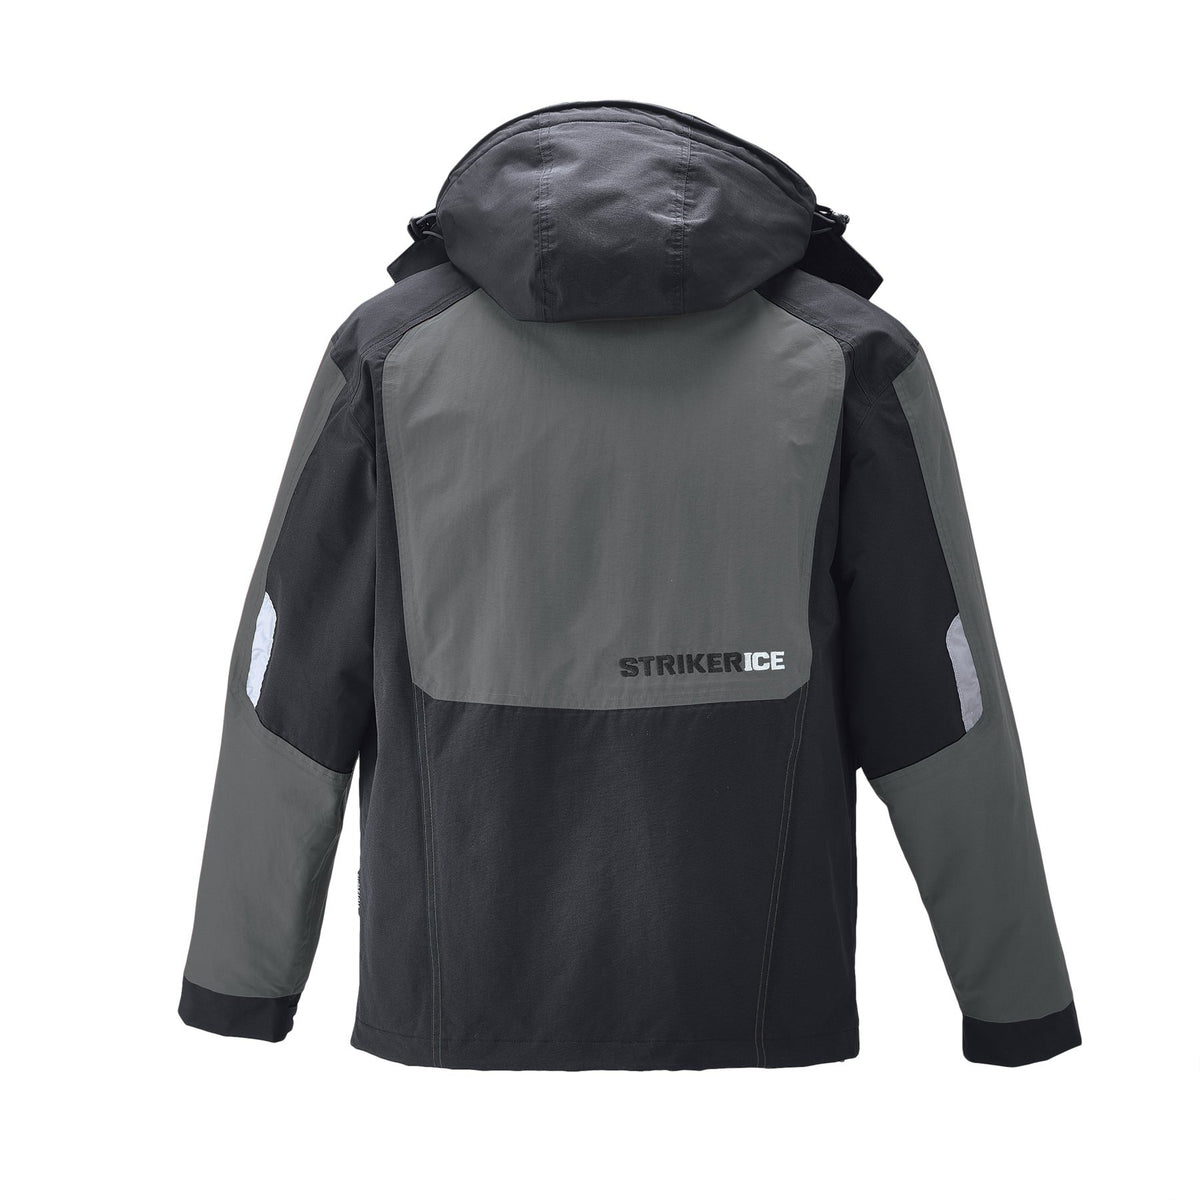 Striker Ice Climate Jacket - Black/Gray - Back